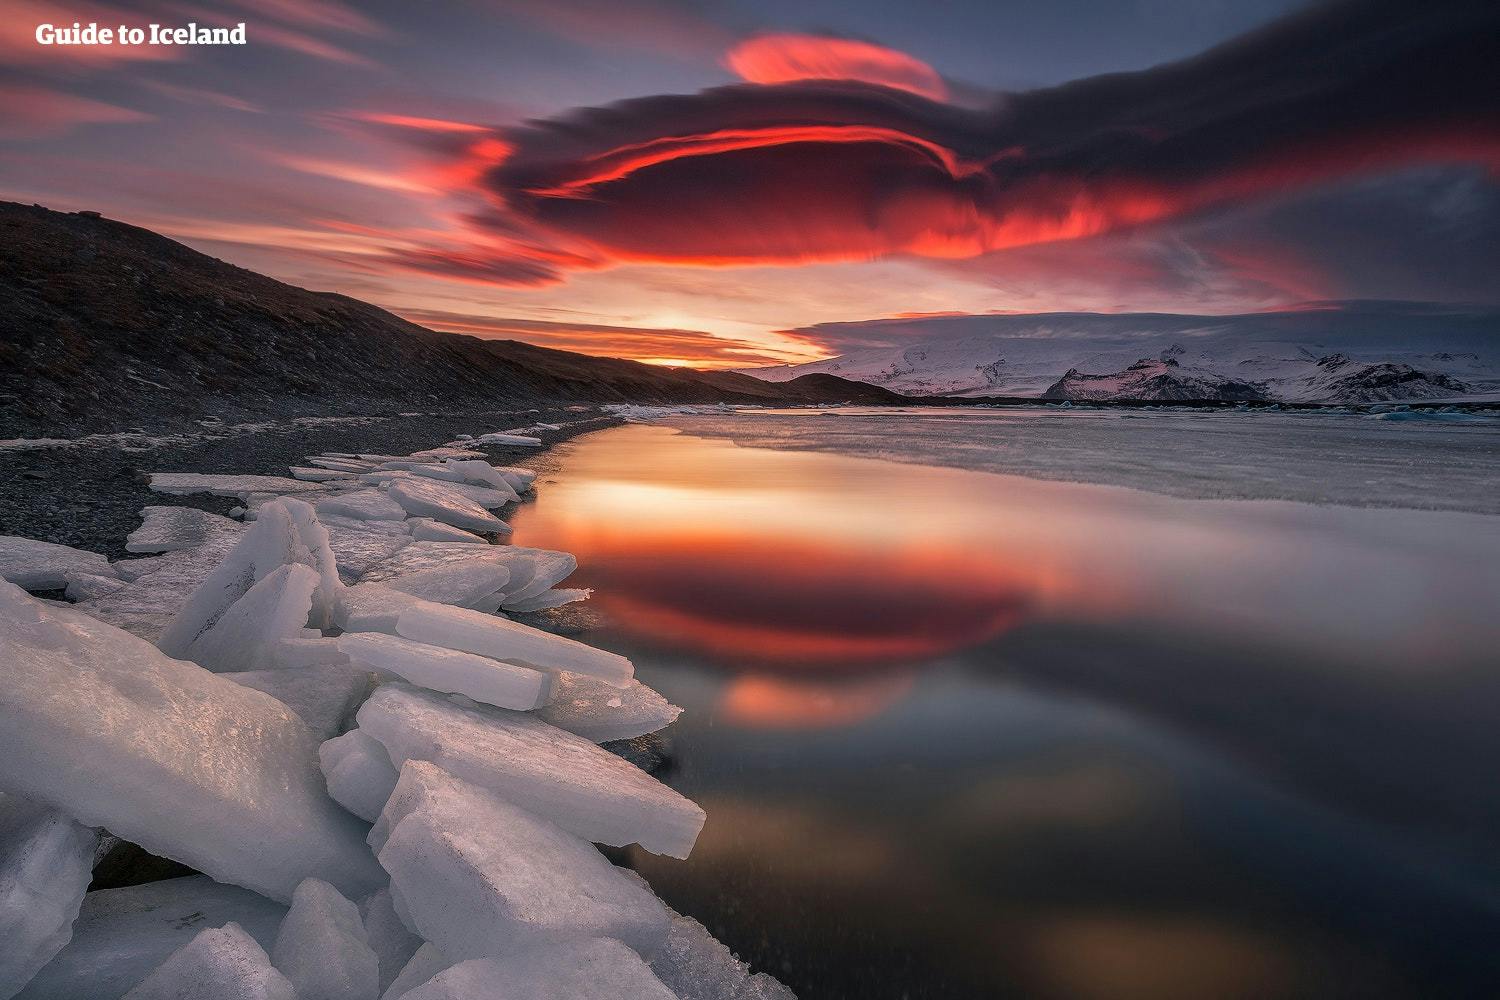 De ondergaande zon boven de gletsjerlagune Jökulsárlón, die de lucht rood schildert